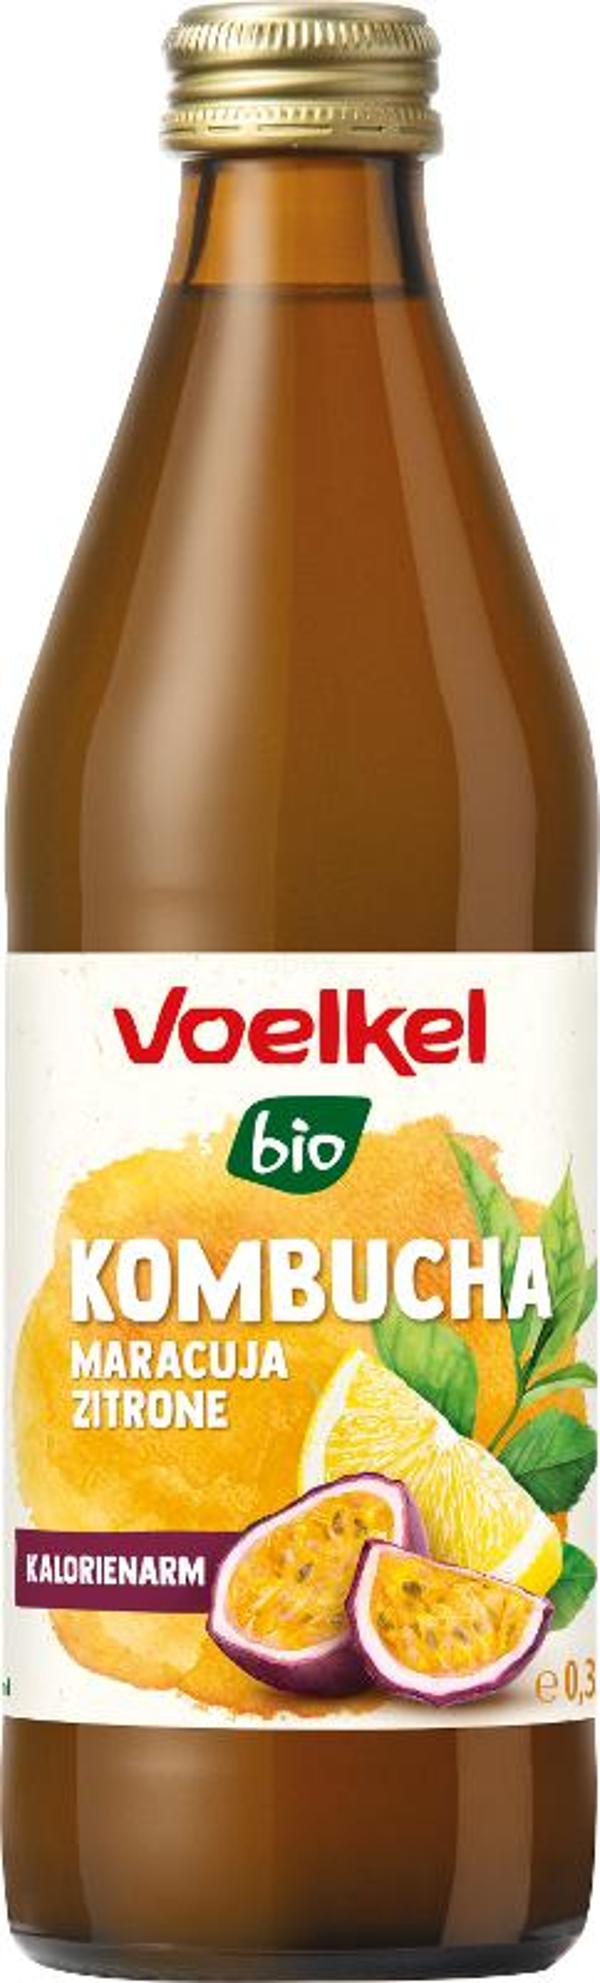 Produktfoto zu Kombucha Maracuja Zitrone